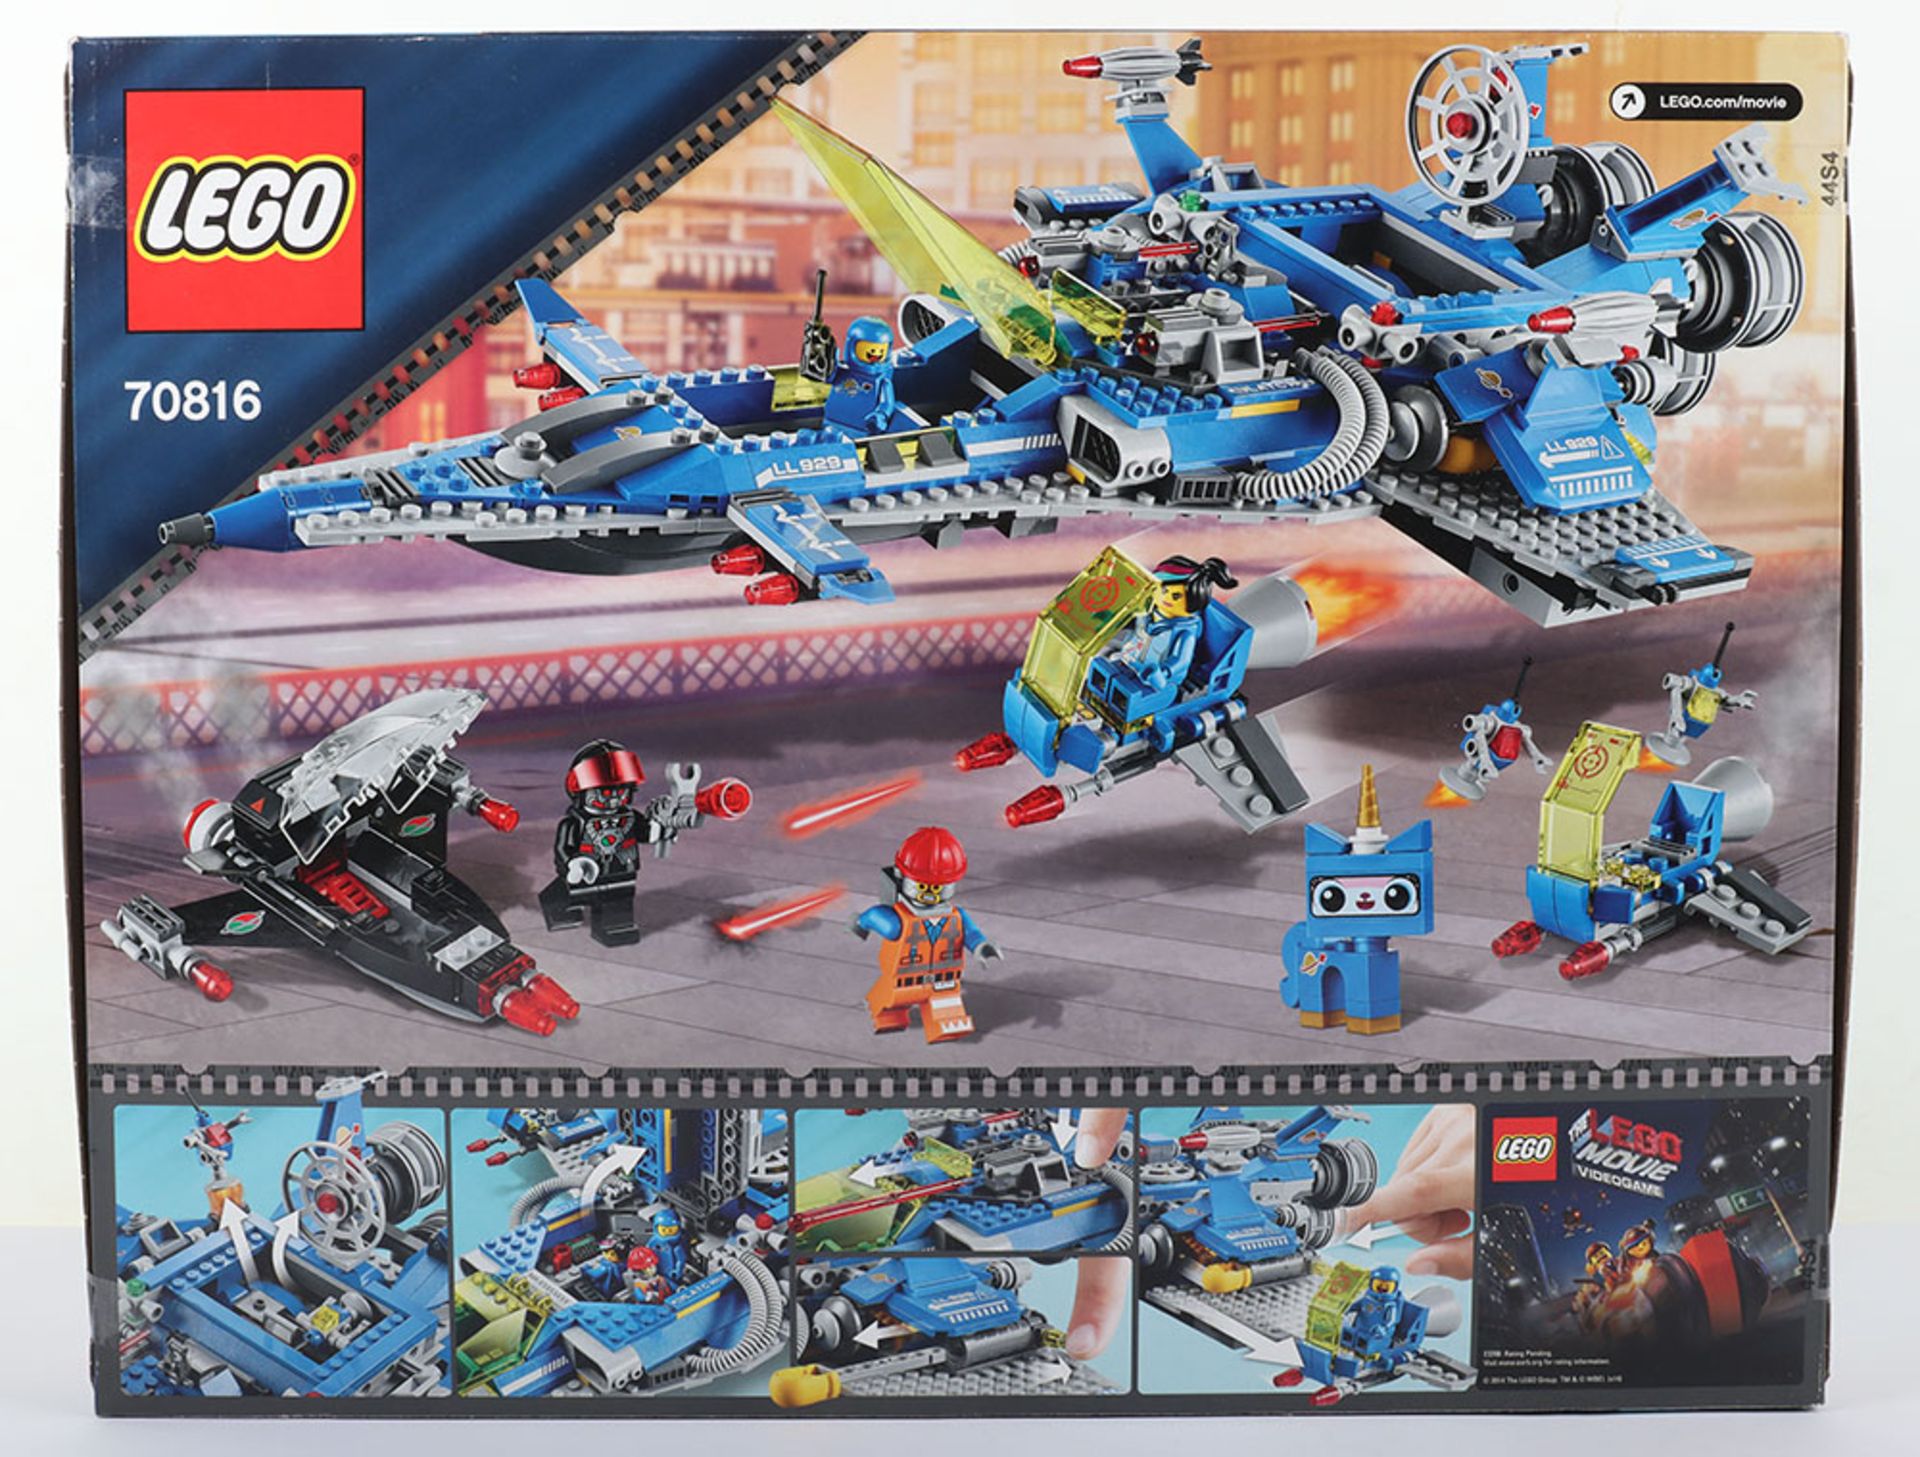 Lego “The Lego Movie” 70816 Benny's Spaceship, Spaceship, SPACESHIP! Sealed boxed - Image 2 of 8